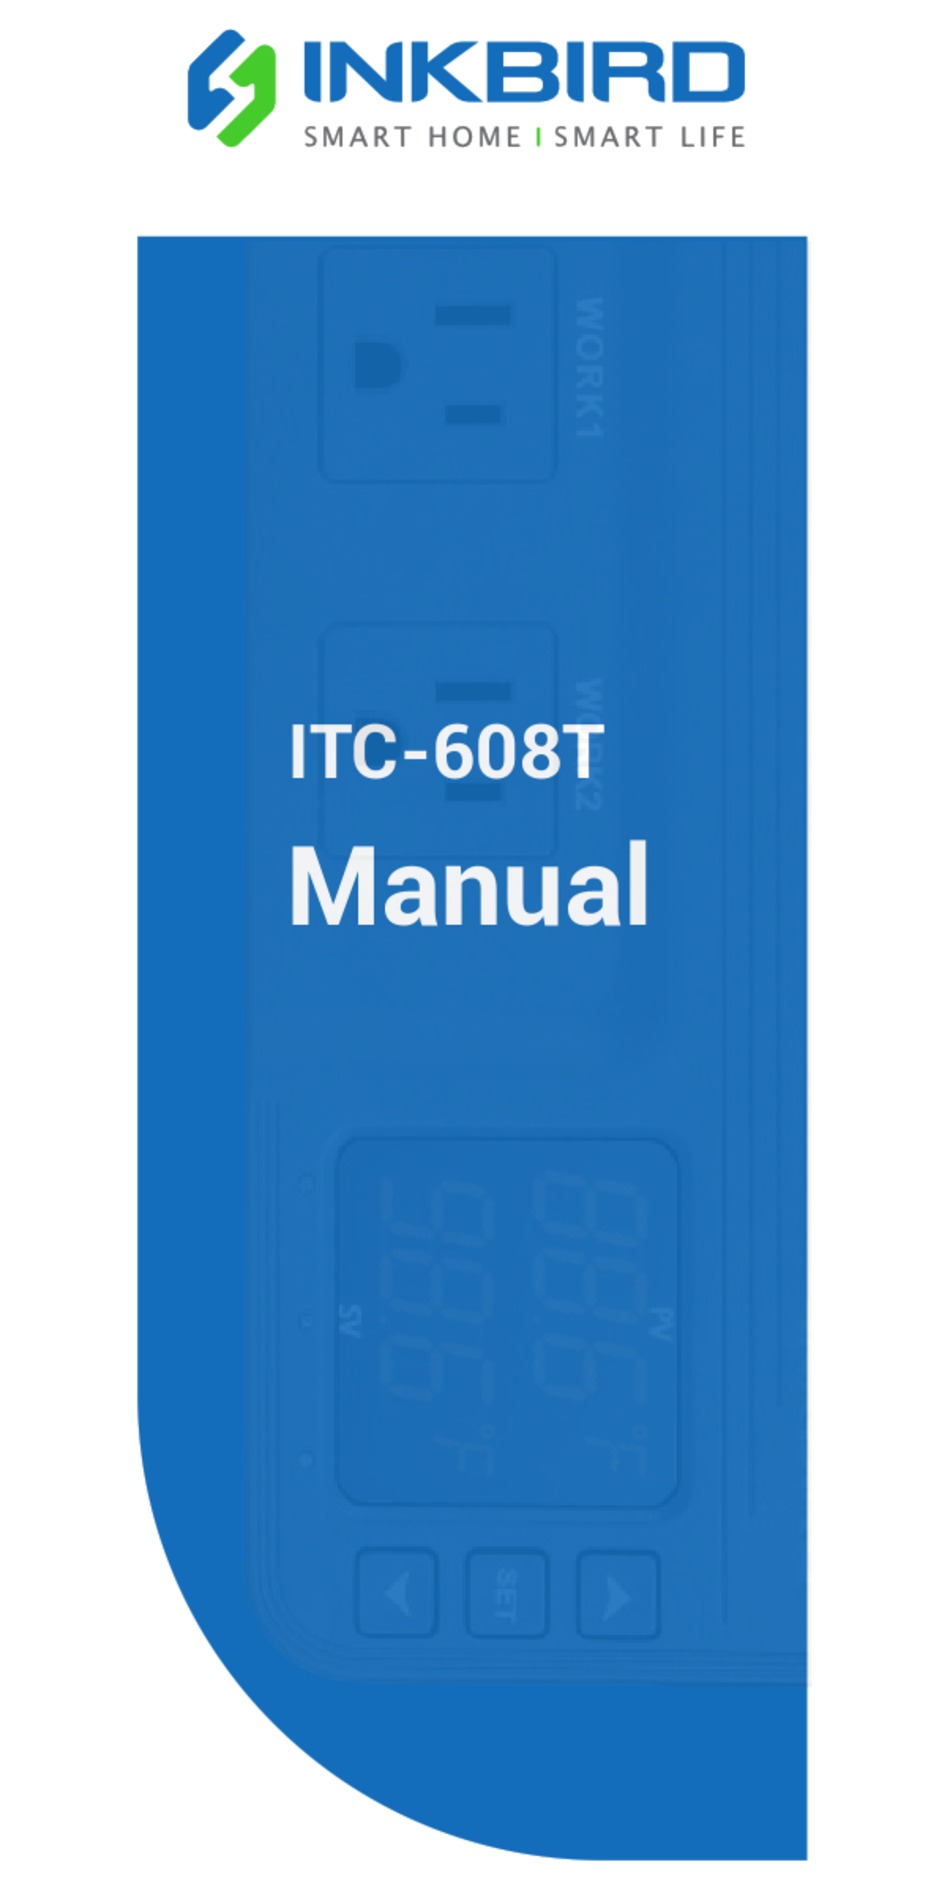 INKBIRD ITC-608T MANUAL Pdf Download | ManualsLib